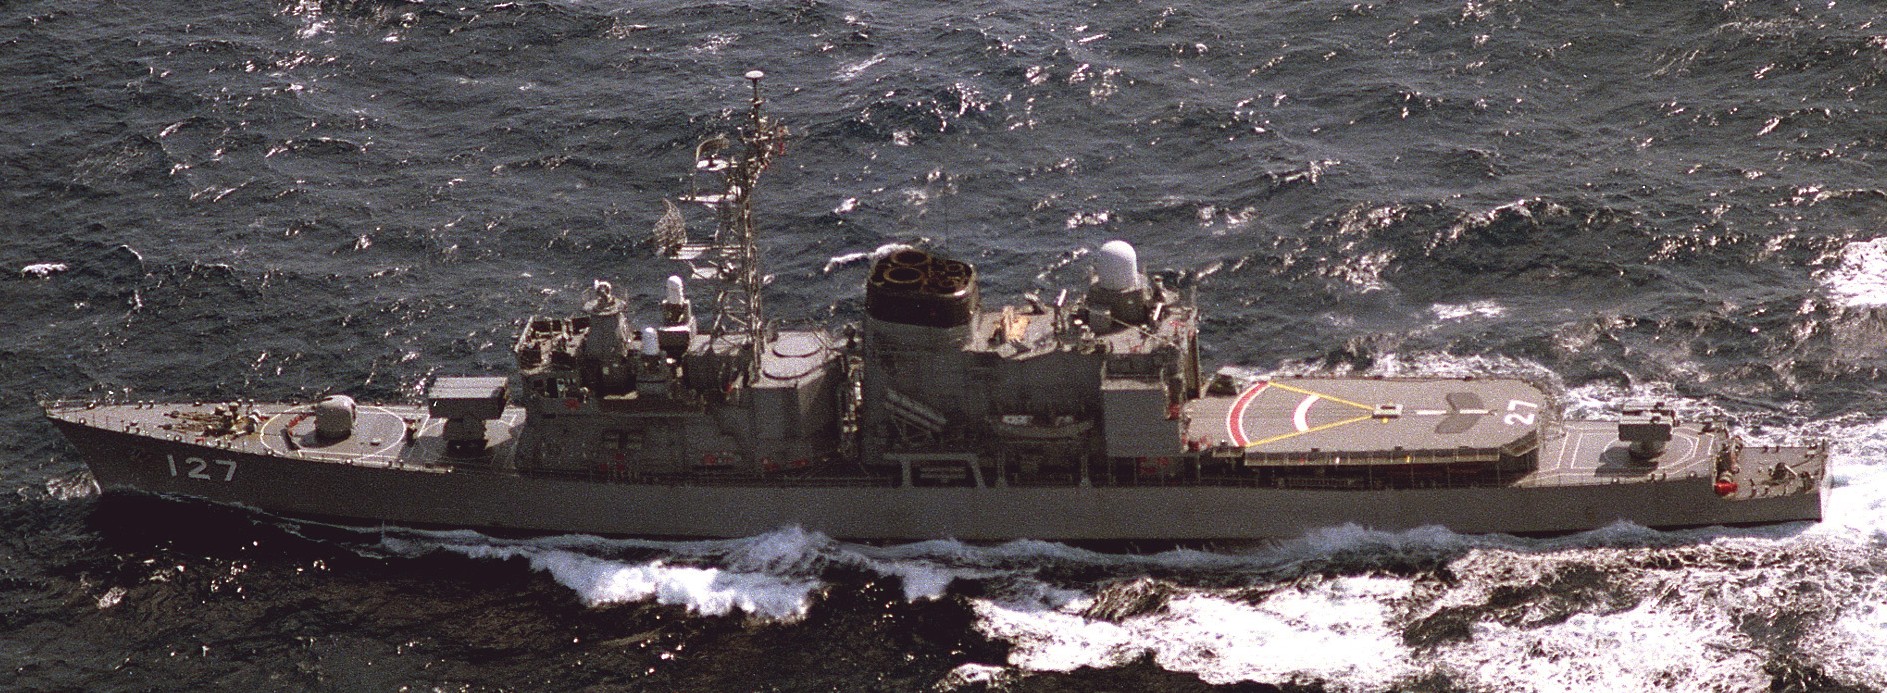 dd-127 jds isoyuki hatsuyuki class destroyer japan maritime self defense force jmsdf 05